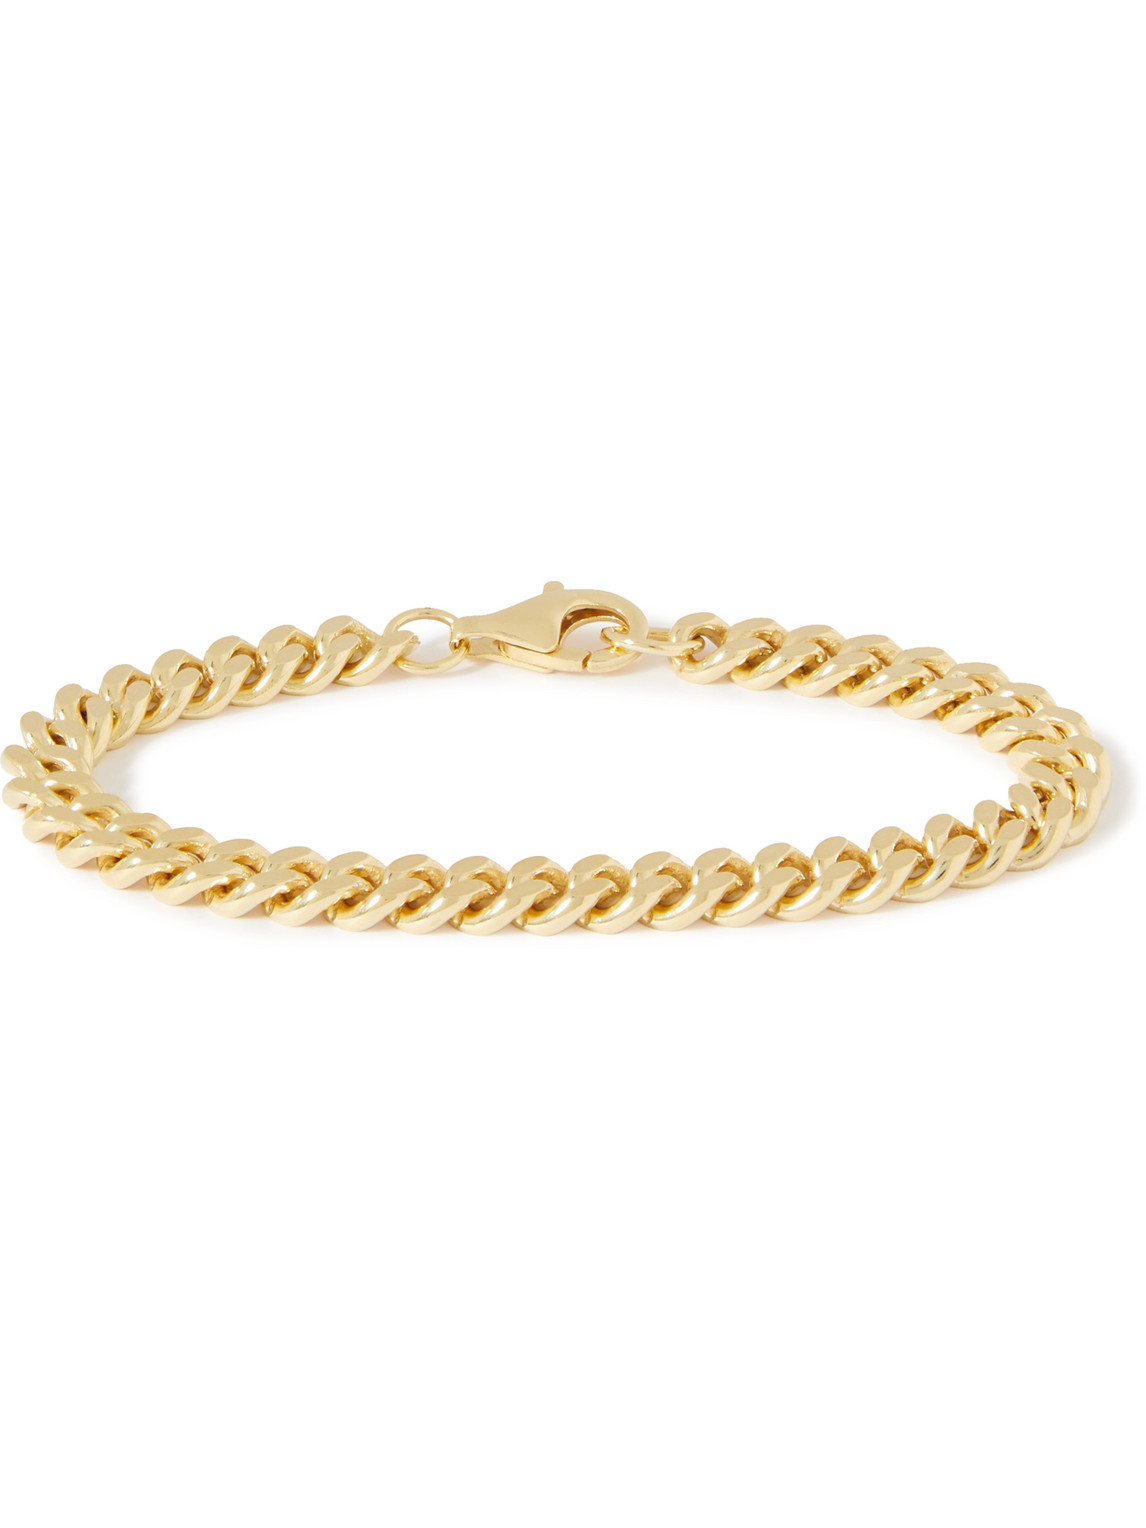 Hatton Labs Gold Vermeil Chain Bracelet